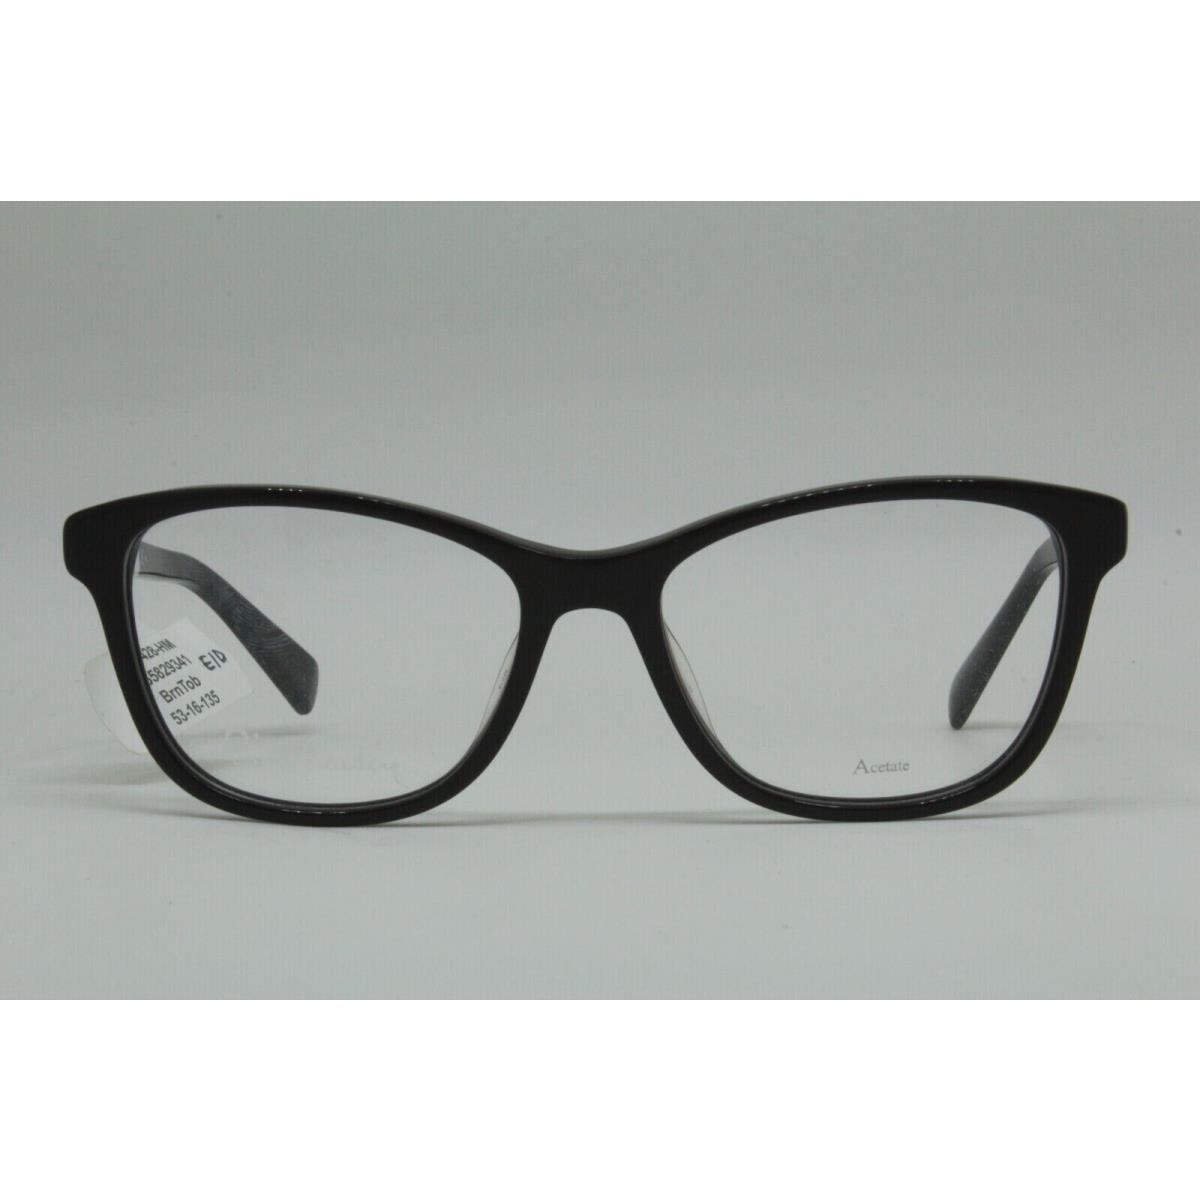 1 Unit Pierre Cardin Brown Tob Eyeglass Frame 53-16-135 168